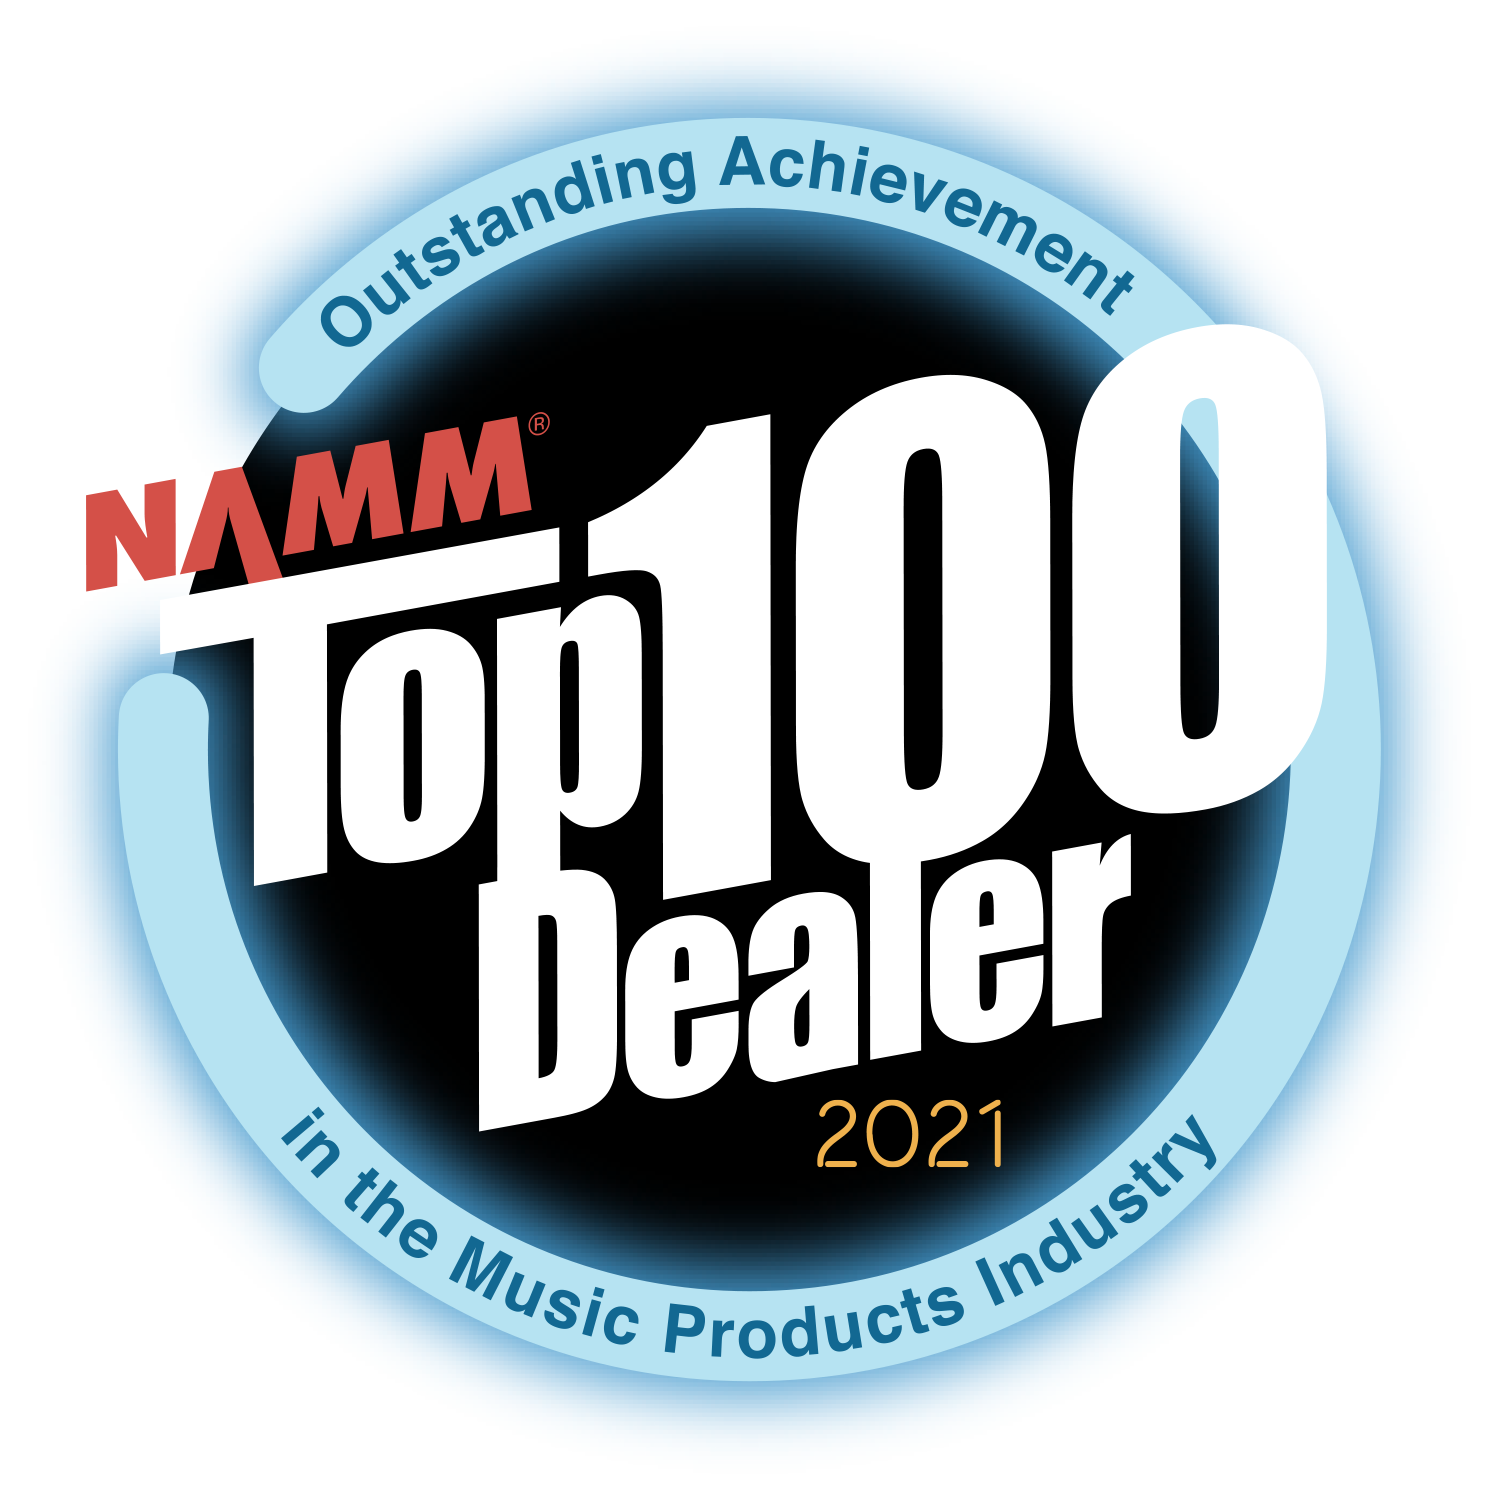 Music Connection named Top 100 Dealer!